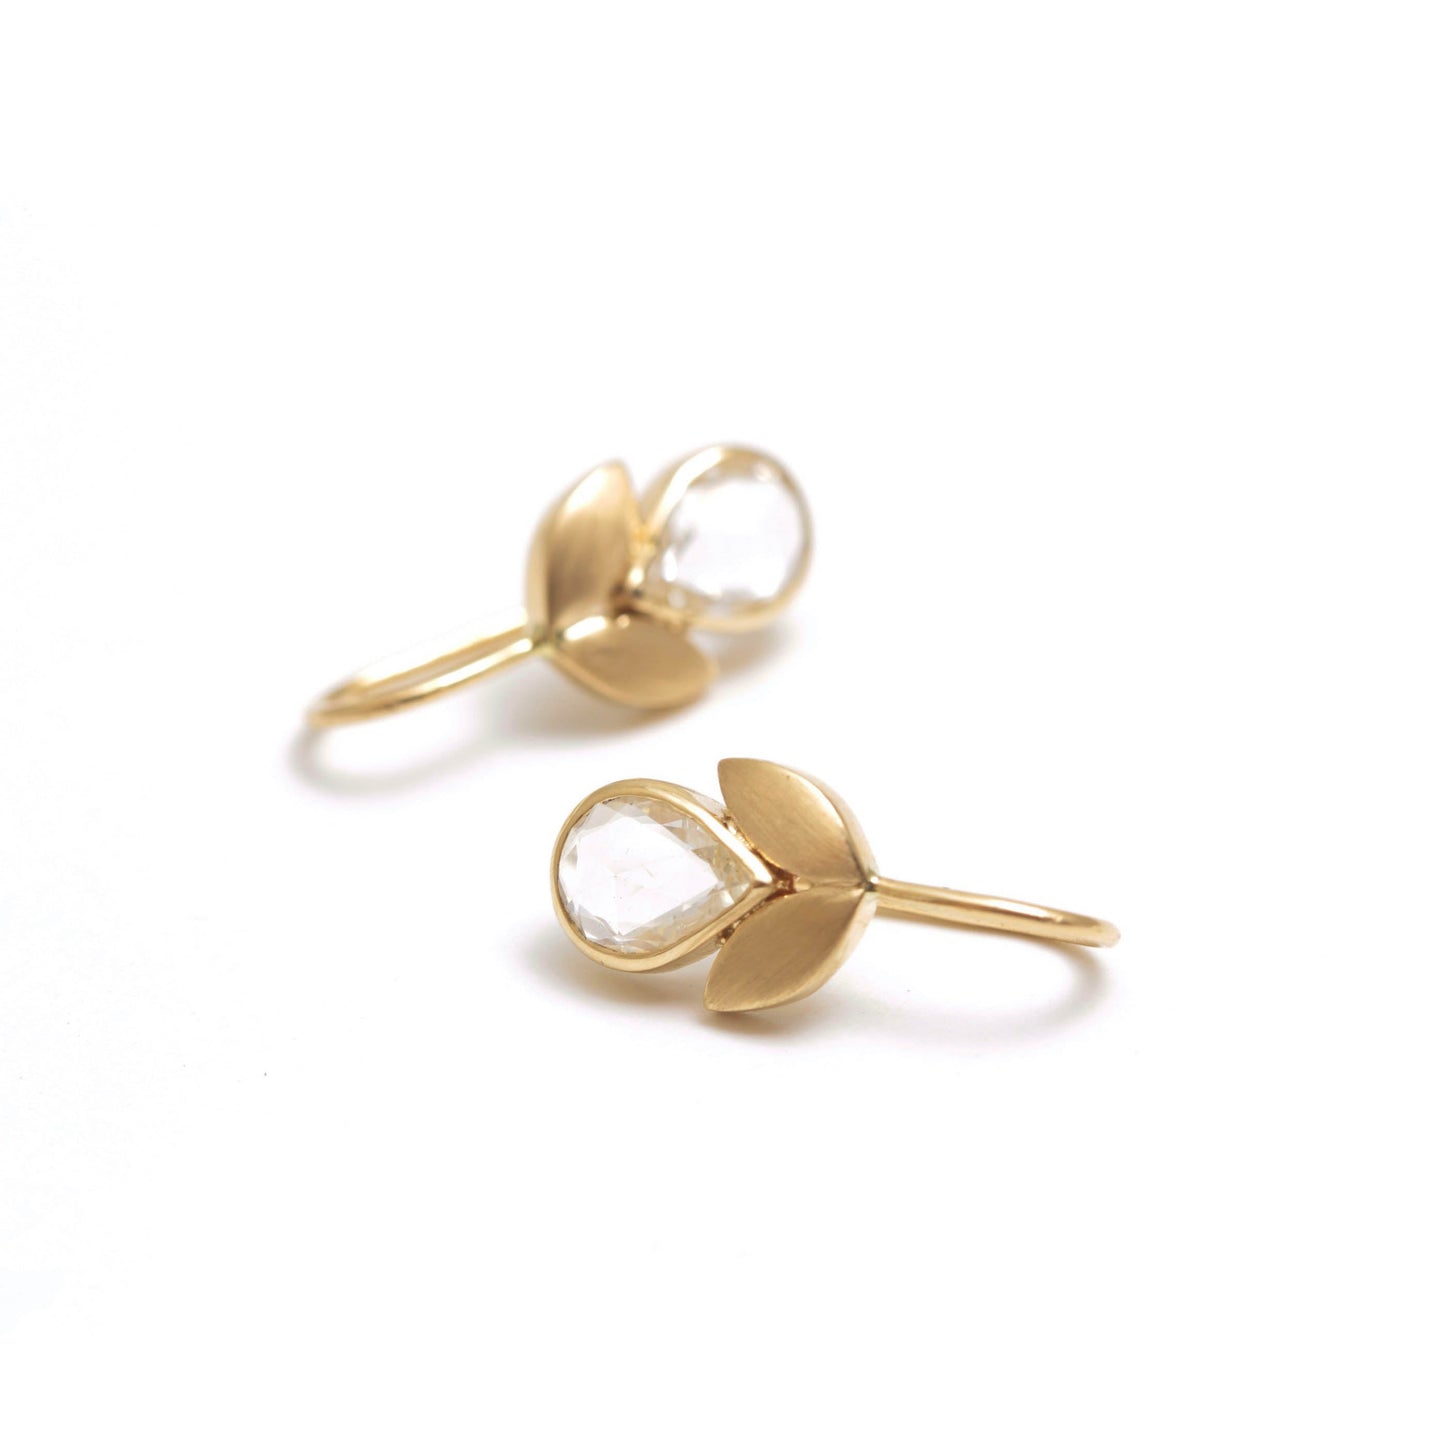 The Vani Gold and White Sapphire Hook Earrings by Rasvihar